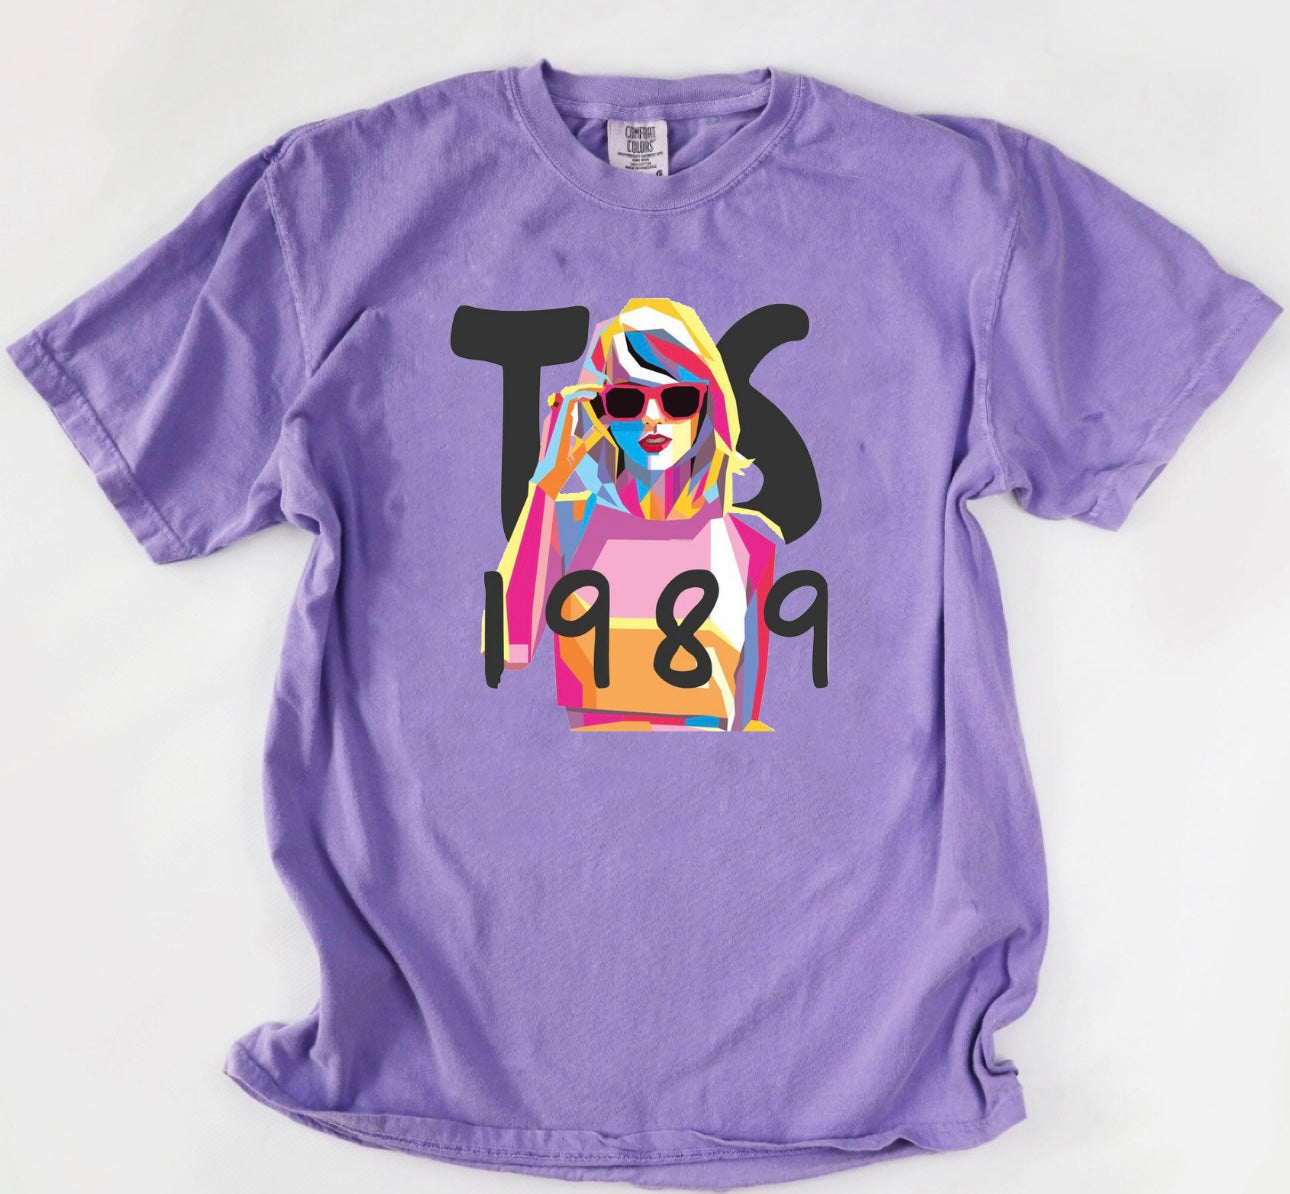 TS 1989 Purple Tee